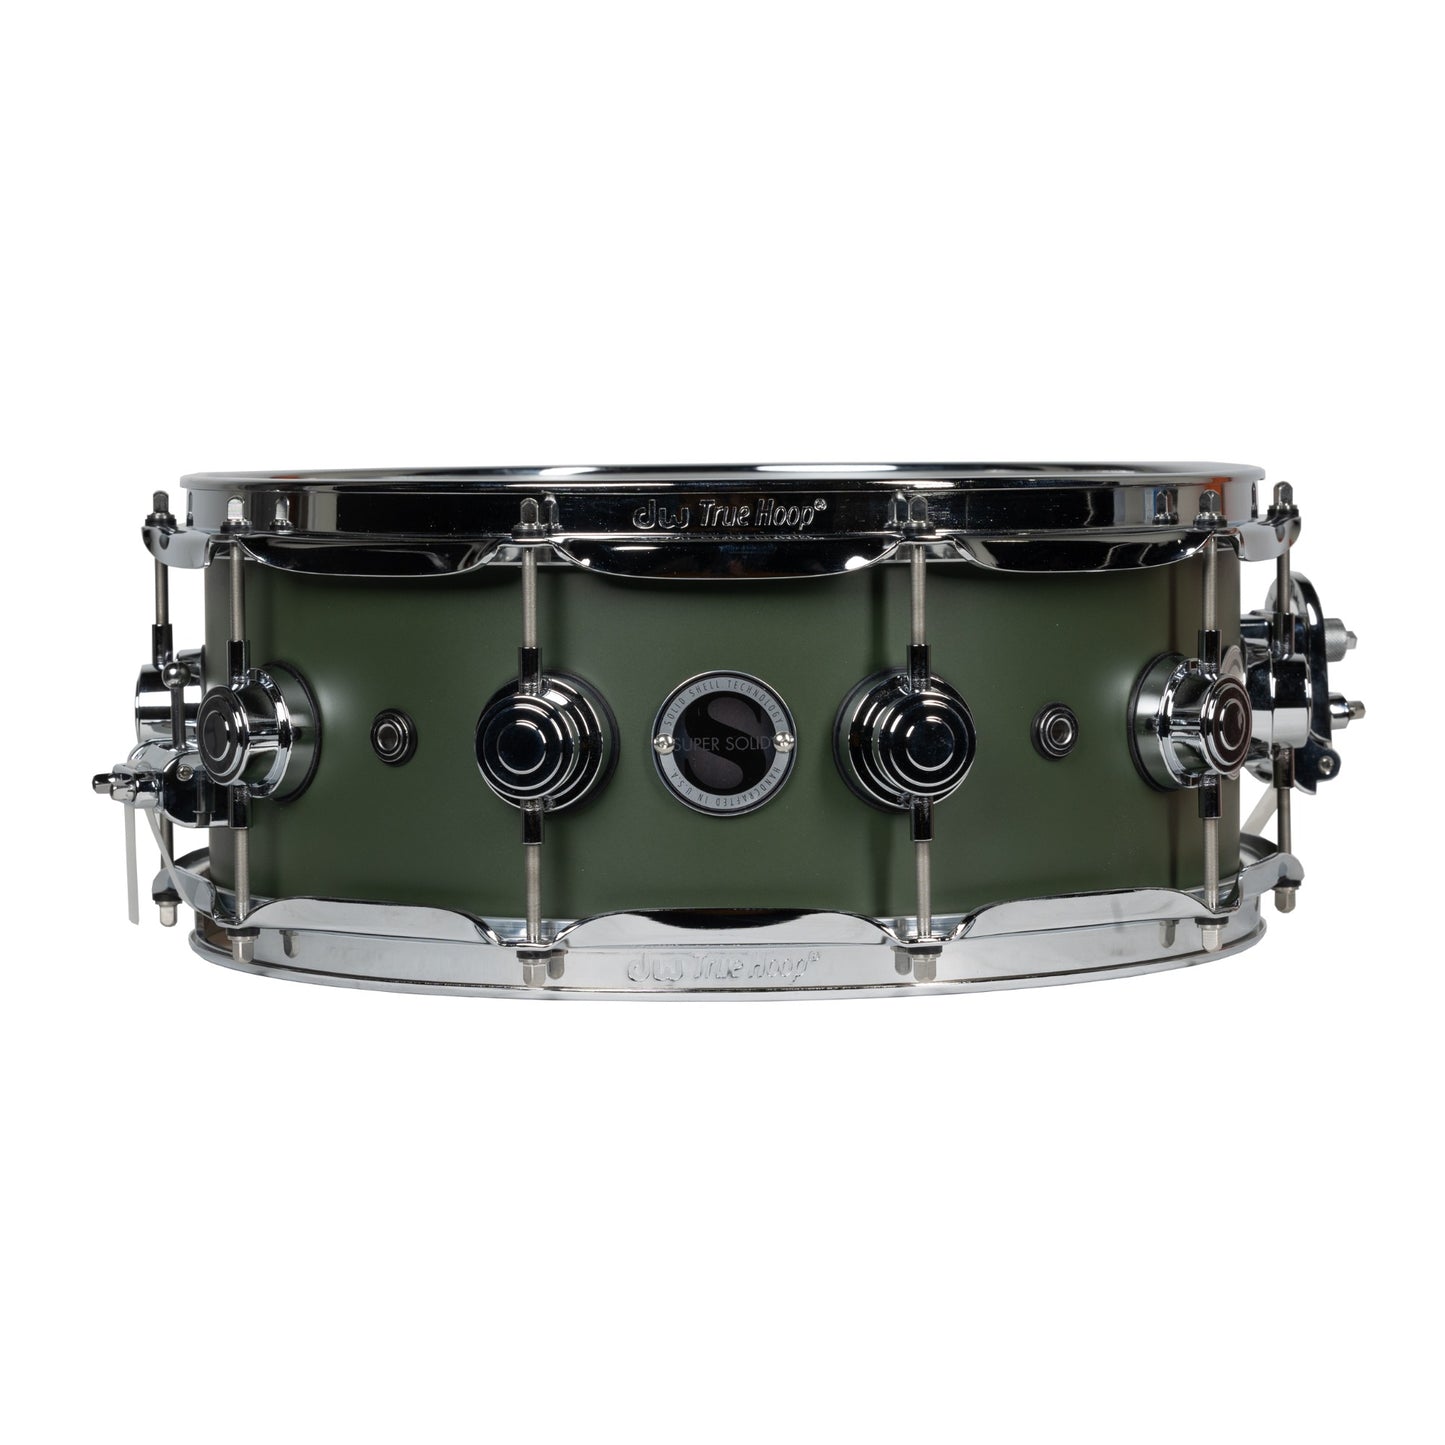 Drum Workshop Collectors Series Super Solid 5.5x14 Snare Drum - Lazer Blue